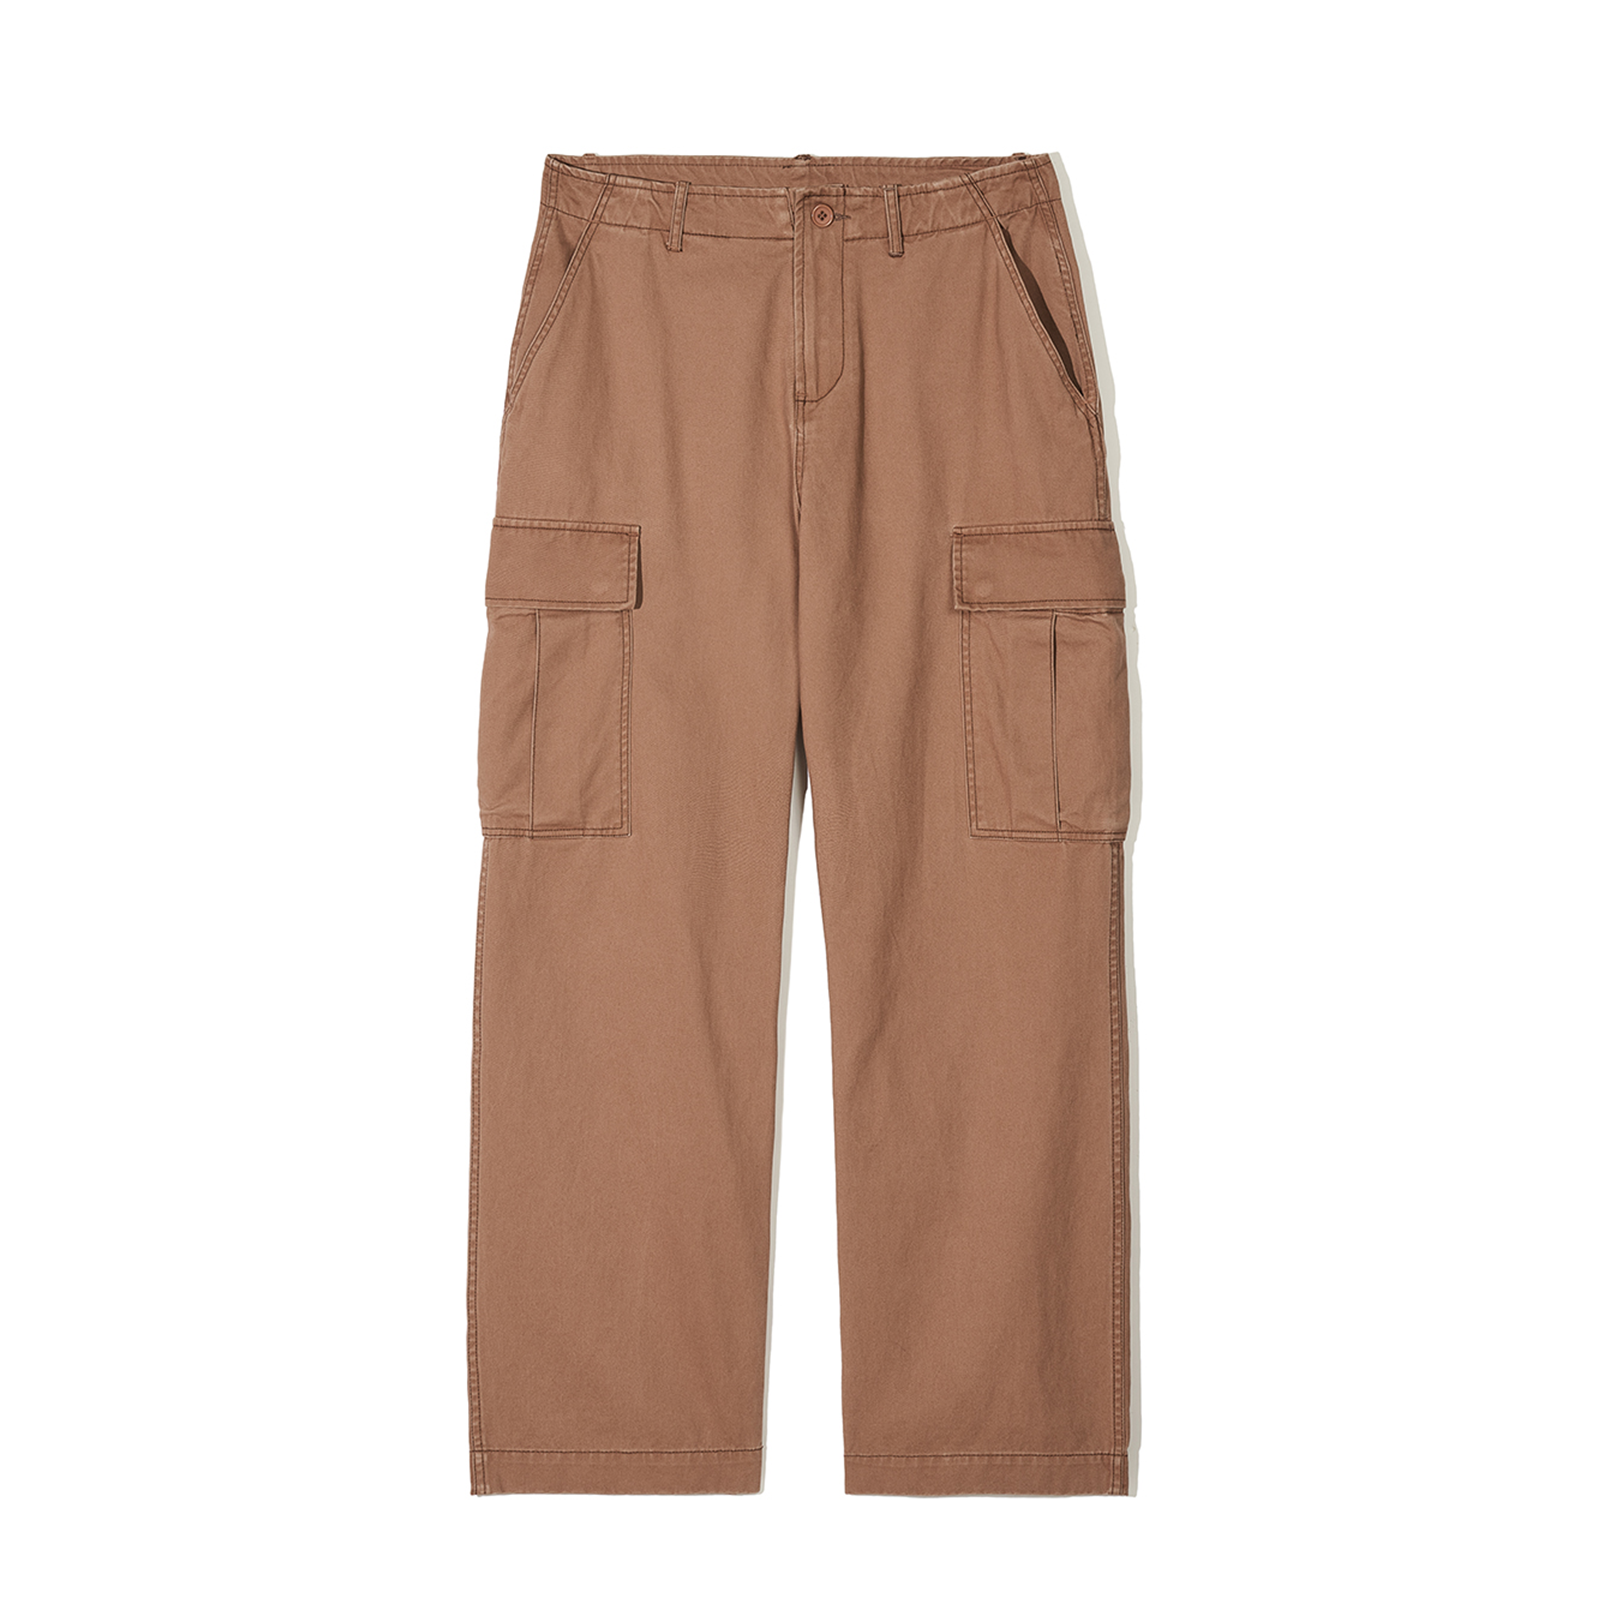 Partimento Vintage Washed Cargo Pants in Orange Brown